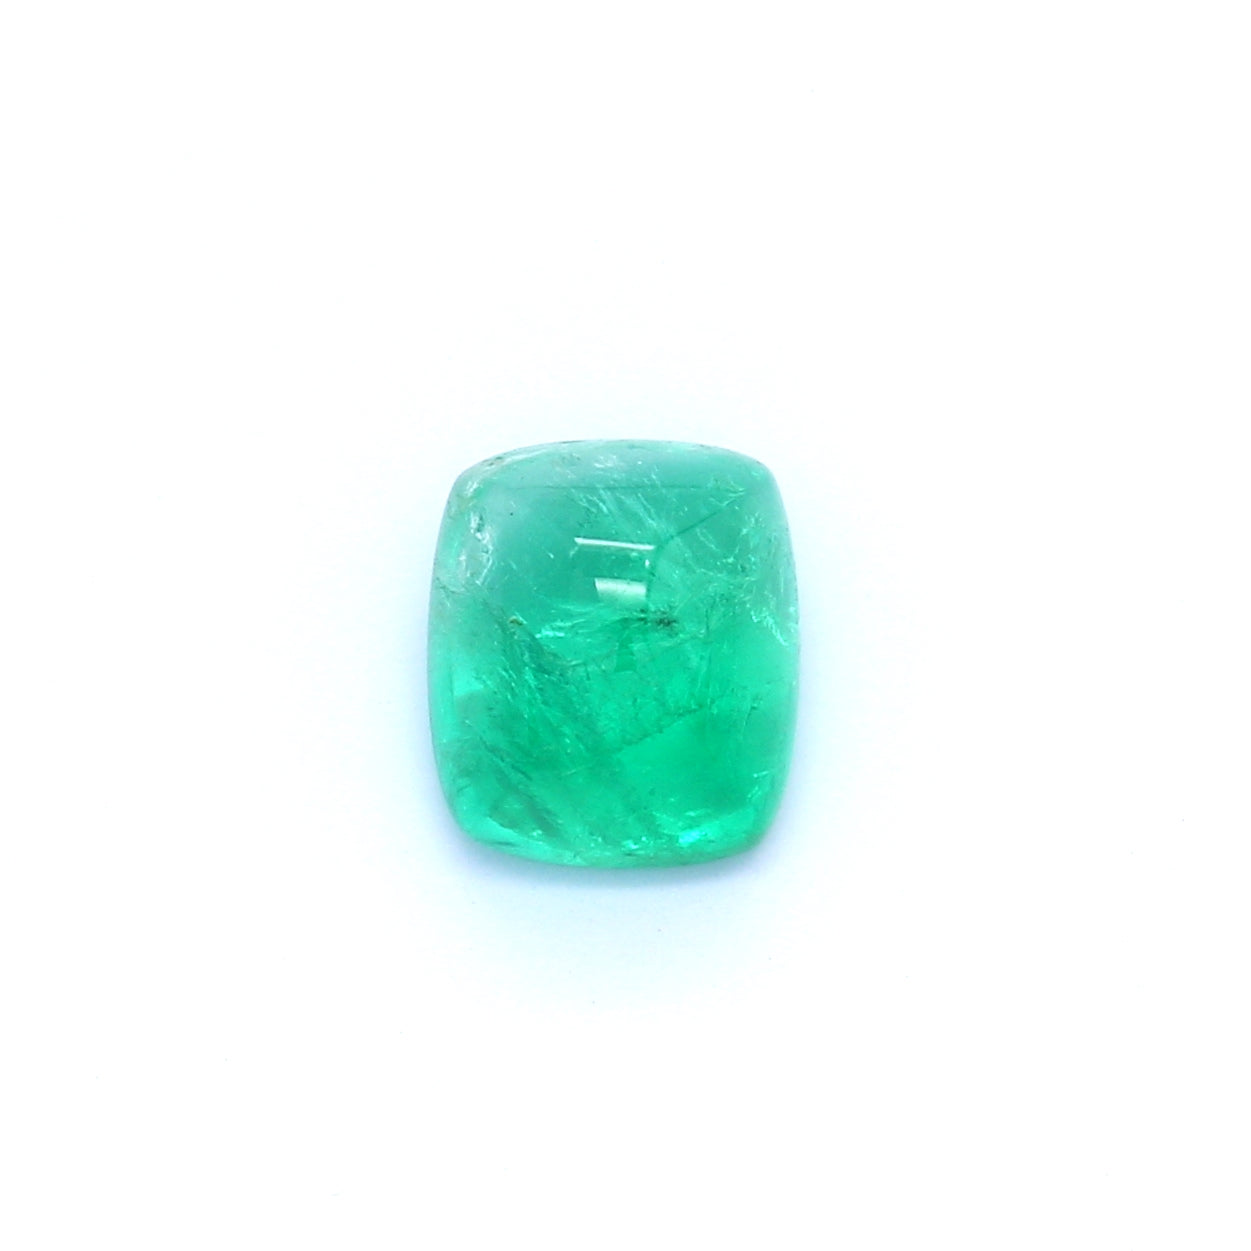 1.85ct Cushion Sugarloaf Emerald, Moderate Oil, Colombia - 7.56 x 6.54 x 4.86mm